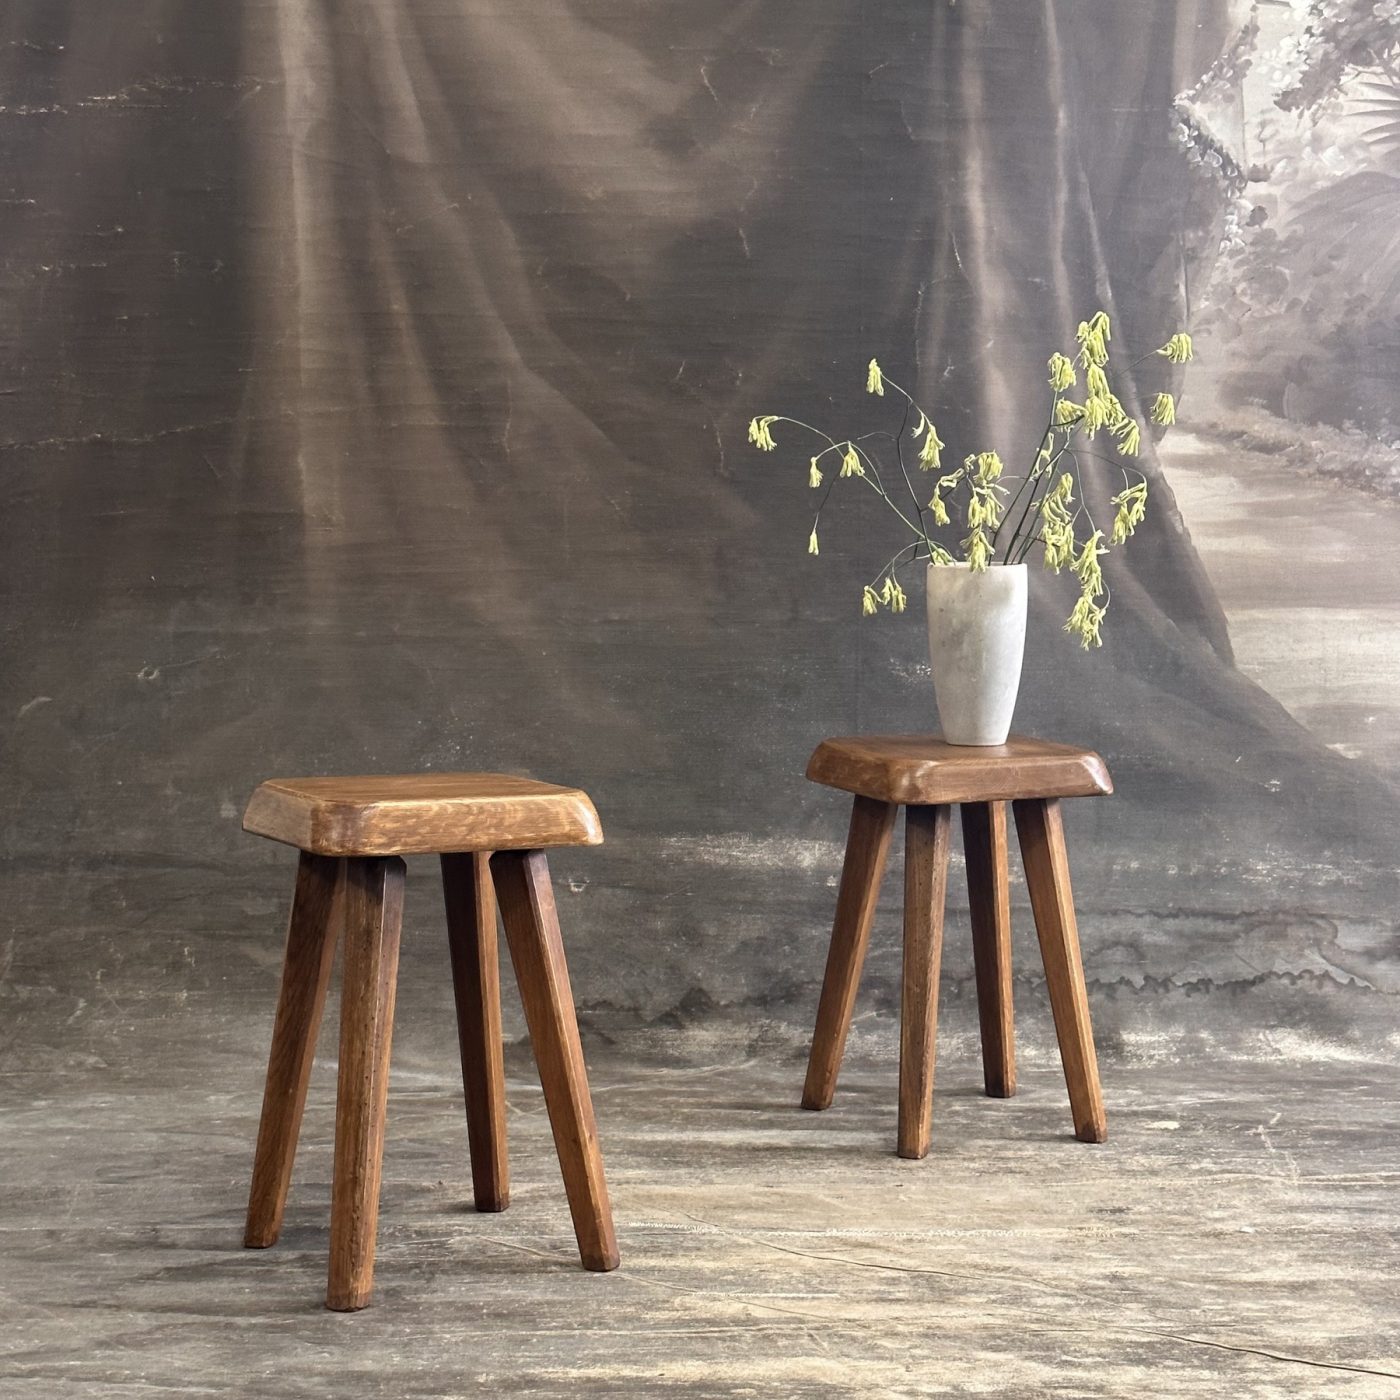 objet-vagabond-pierrechapo-stools0005